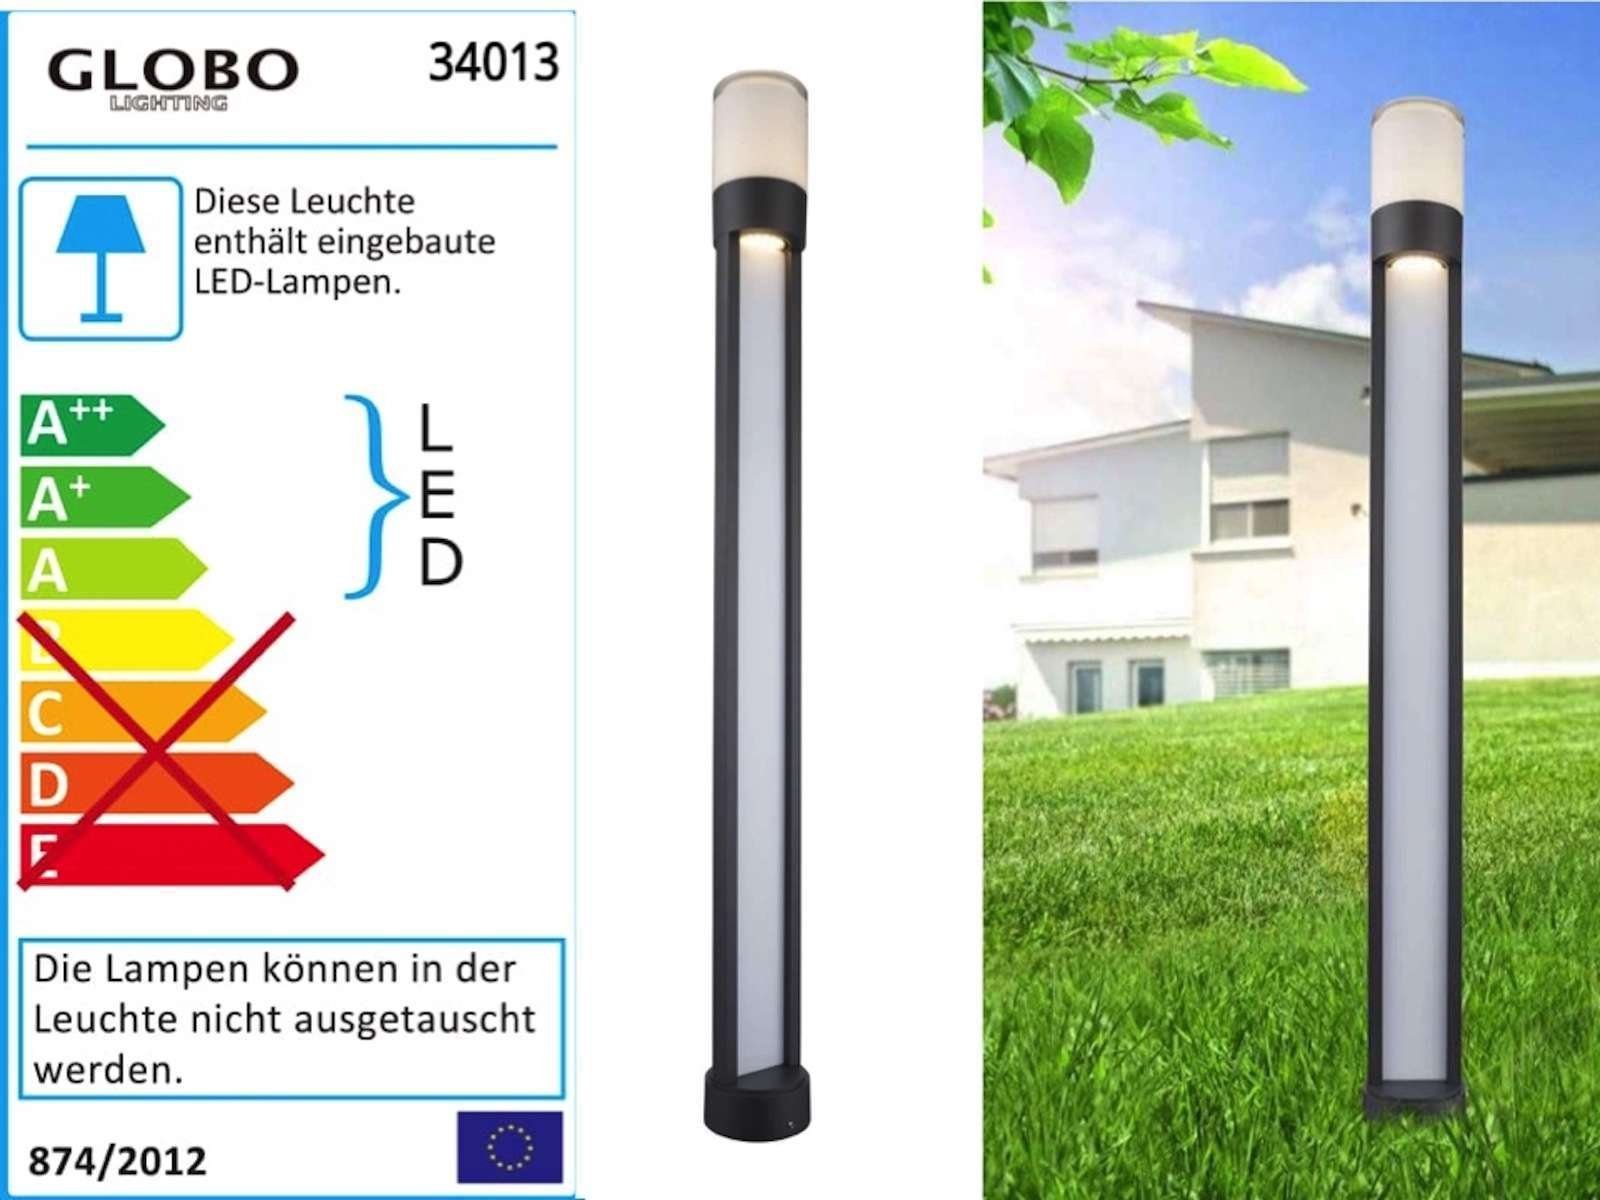 LED rund Aluminium-Druckguss Außenleuchte Globo 34013 lang Gartenleuchte GLOBO Nexa